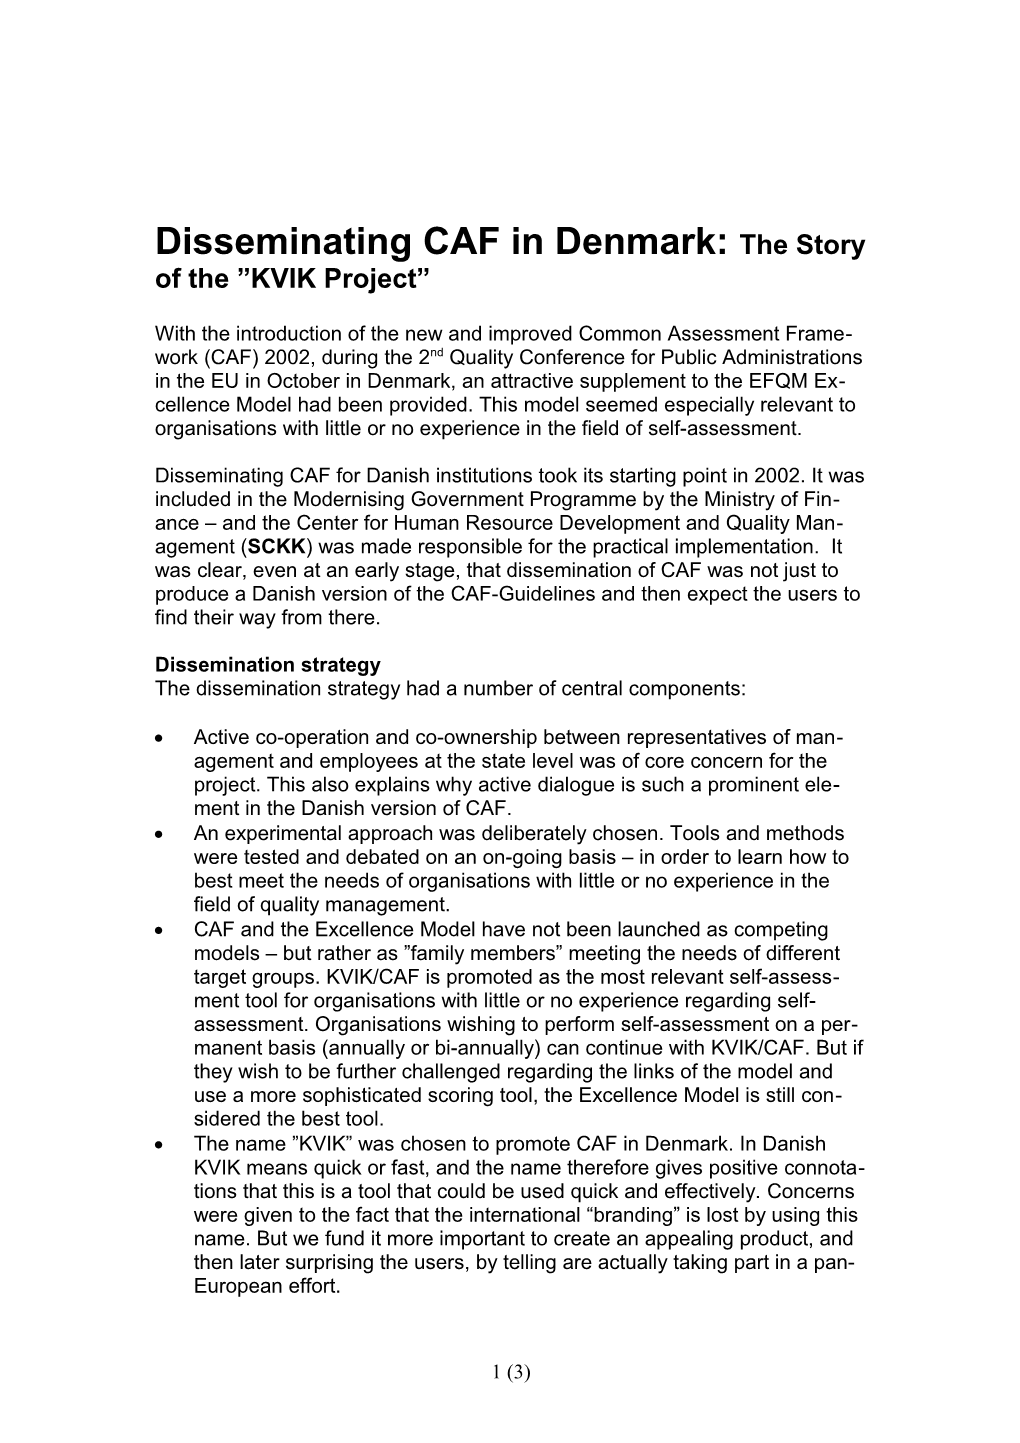 Dissemination of CAF in Denmark